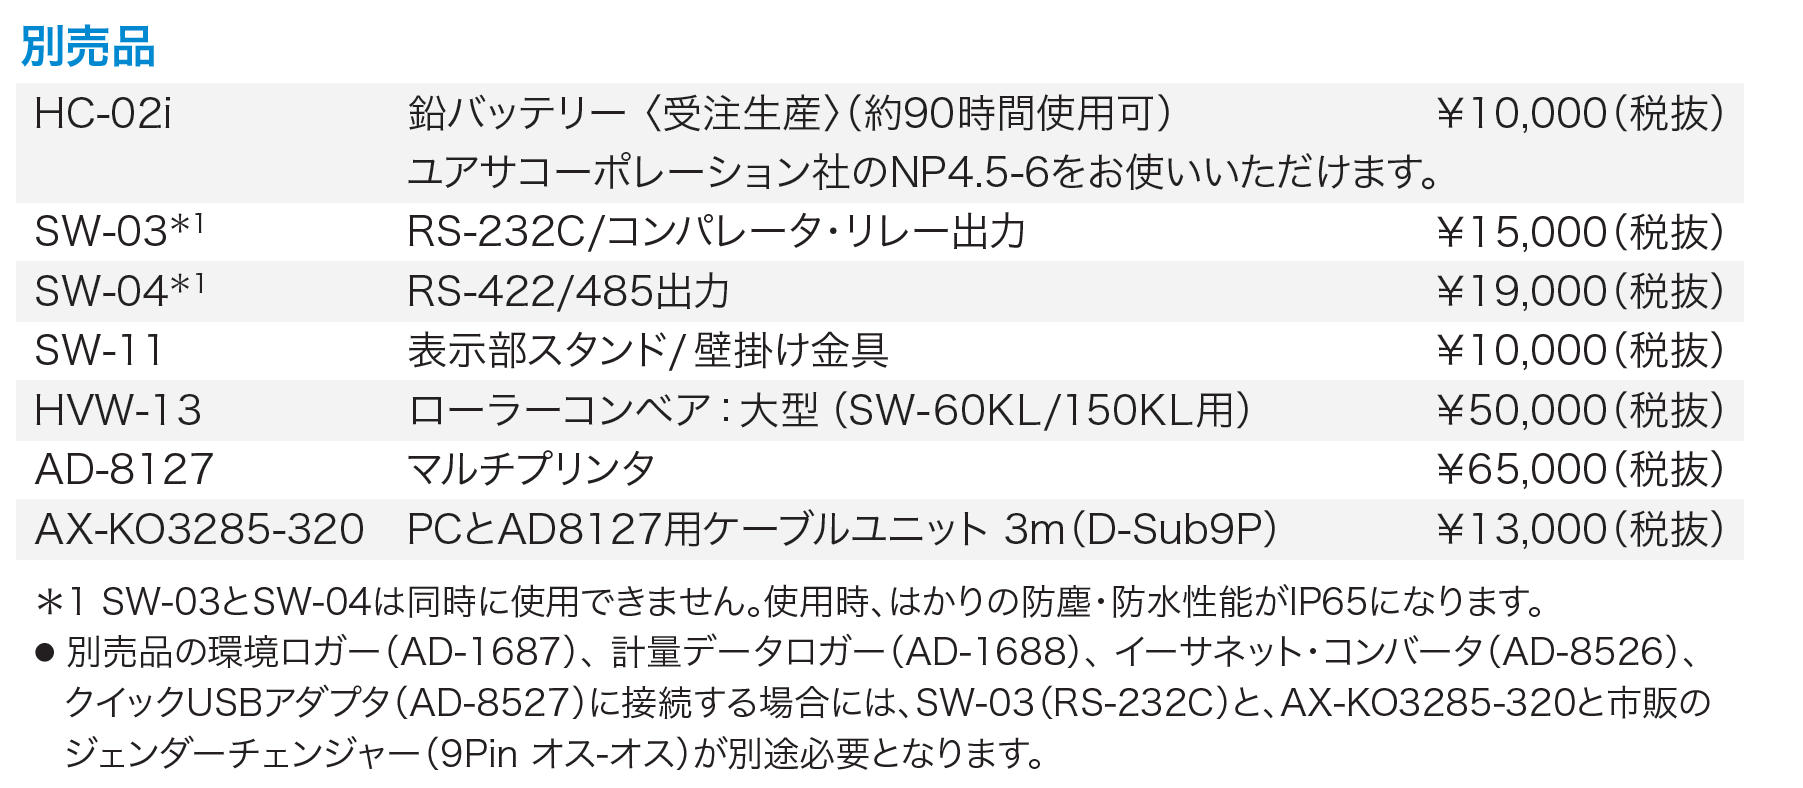 NBK SPC450-6 イソメック SPプーリー 鍋屋バイテック - 2